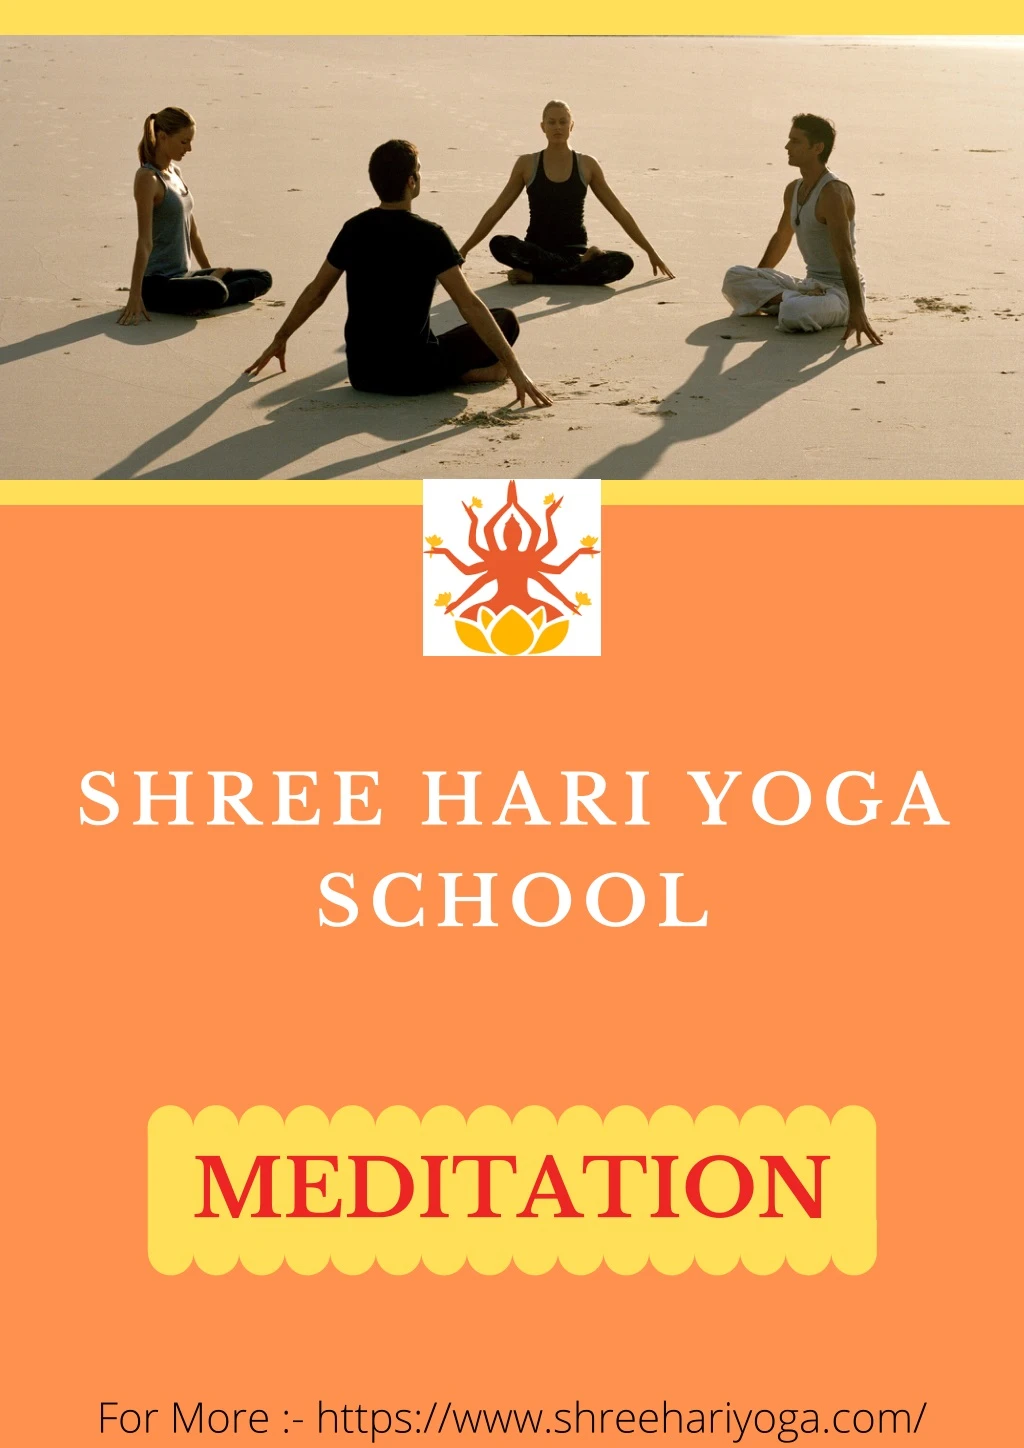 shree hari yoga school